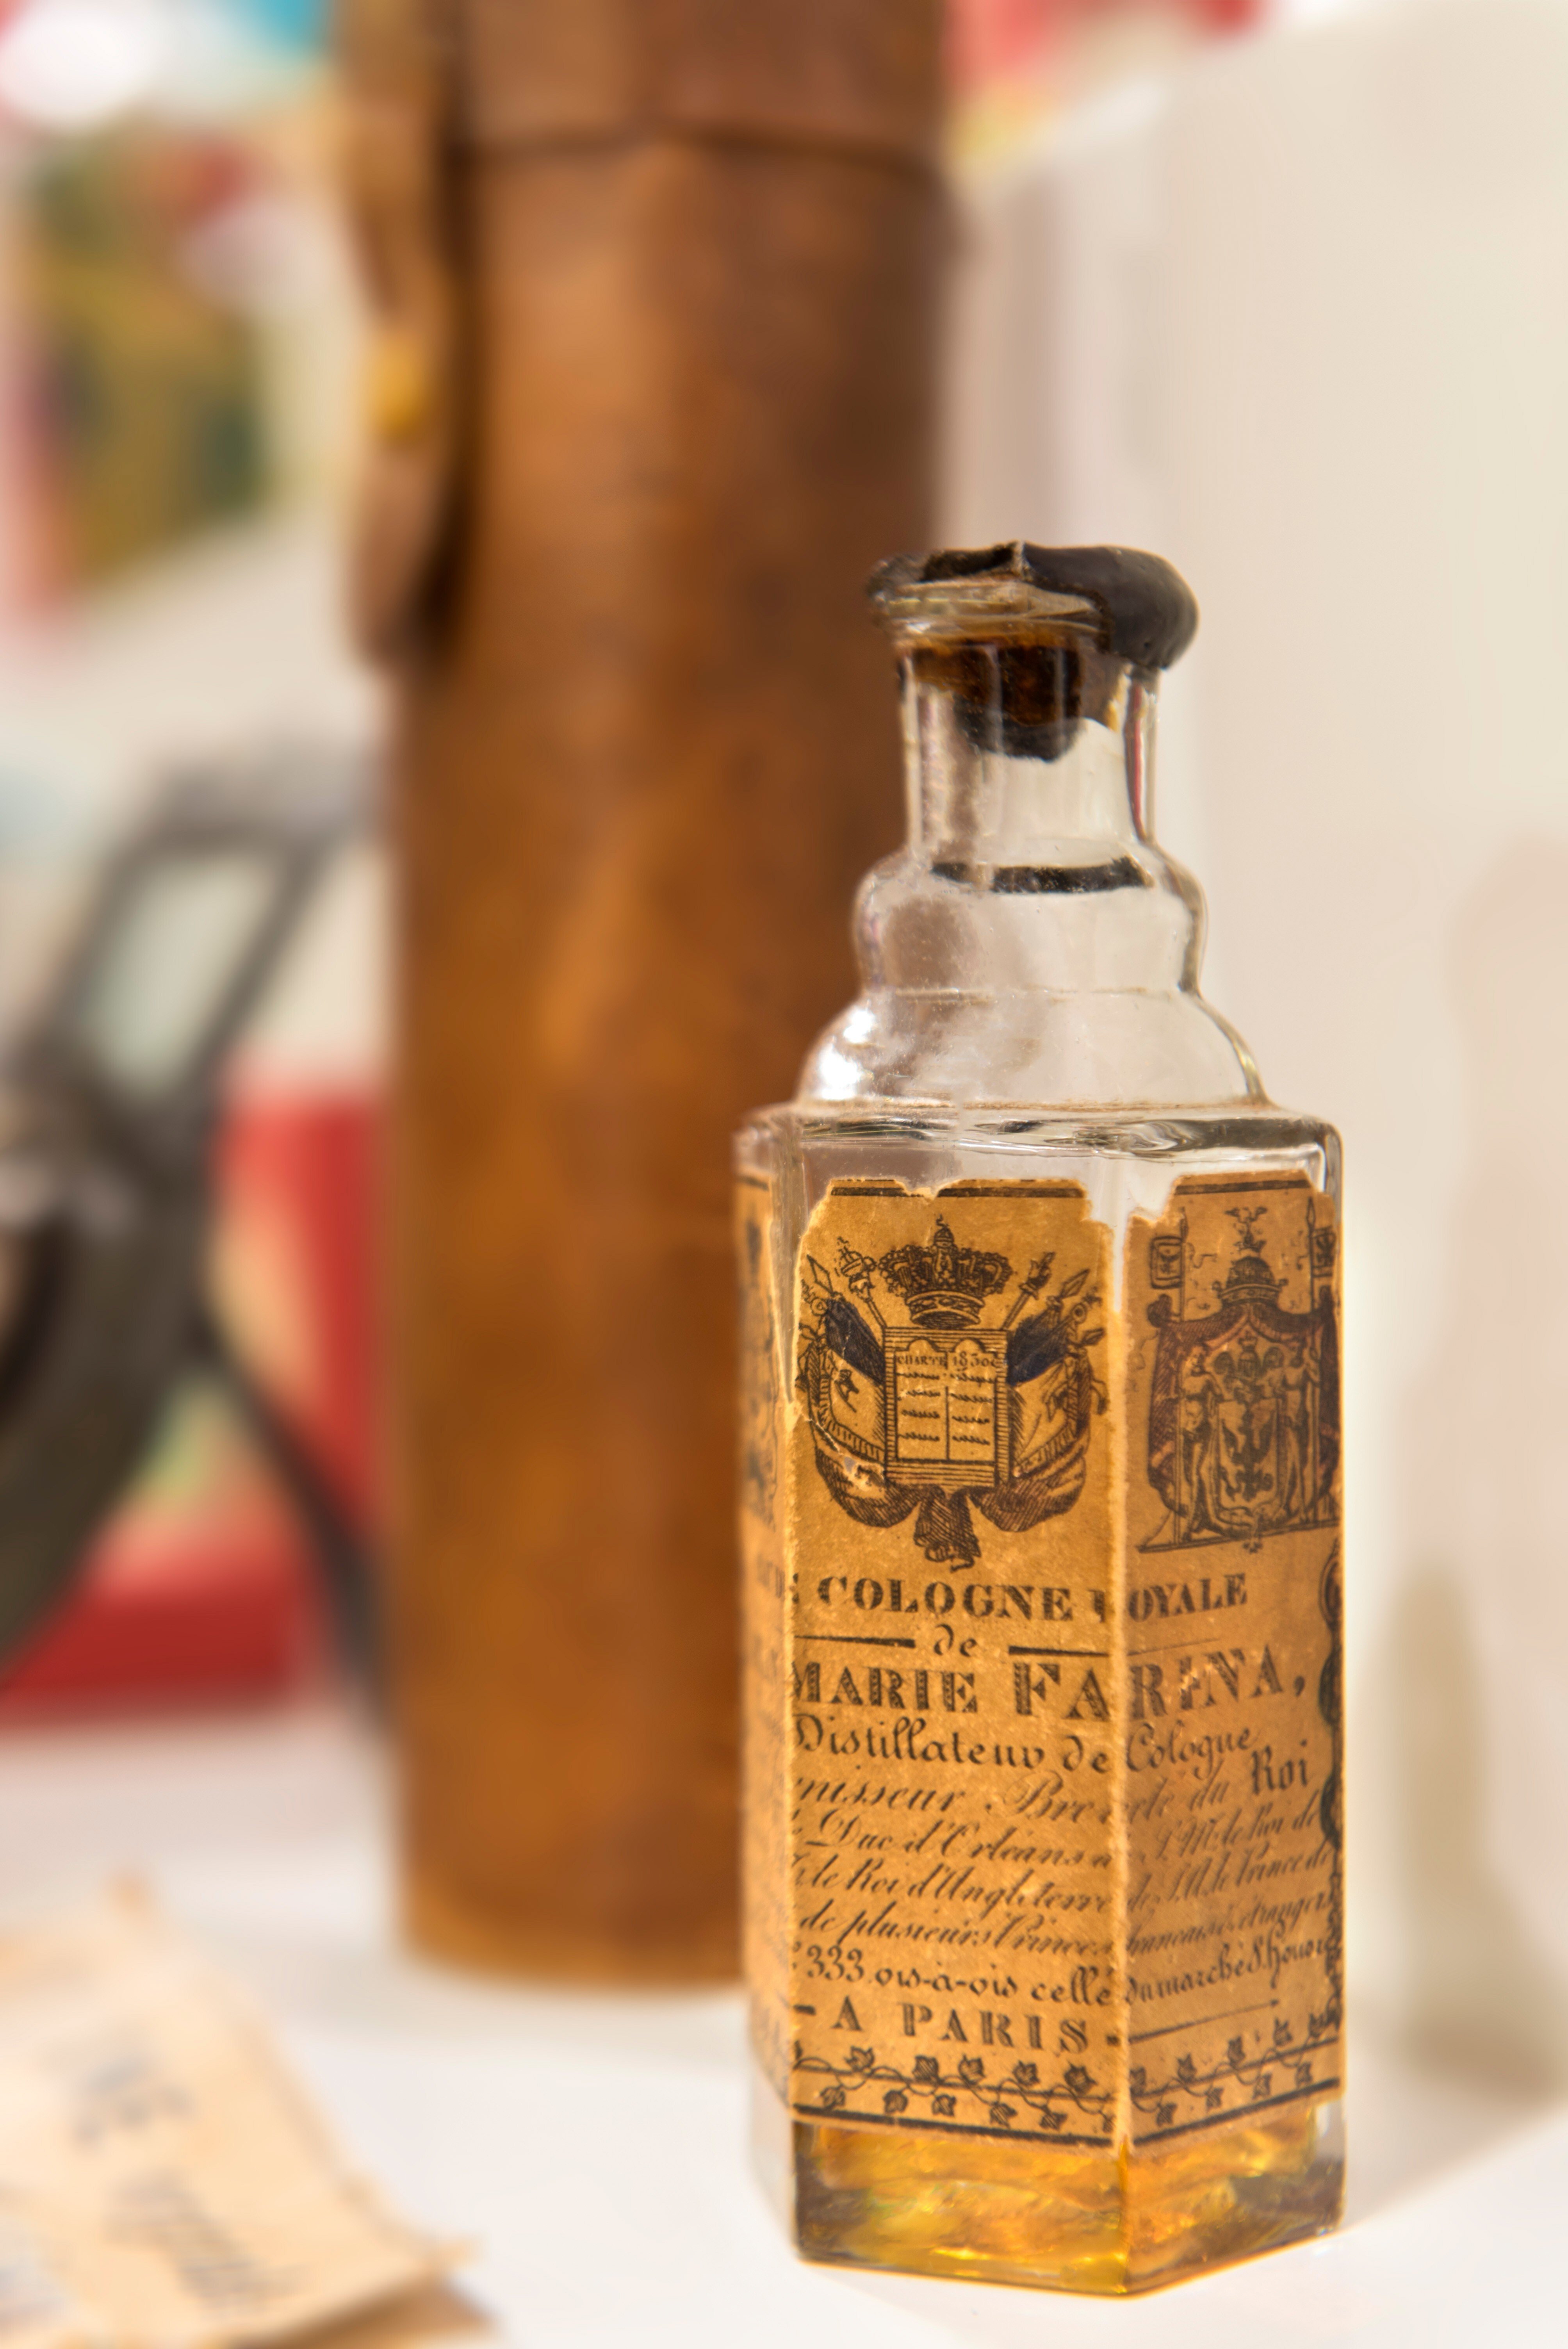 The oldest bottle of eau de cologne Jean-Marie Farina found in Valle Vigezzo. Photo: Susy Mezzanotte